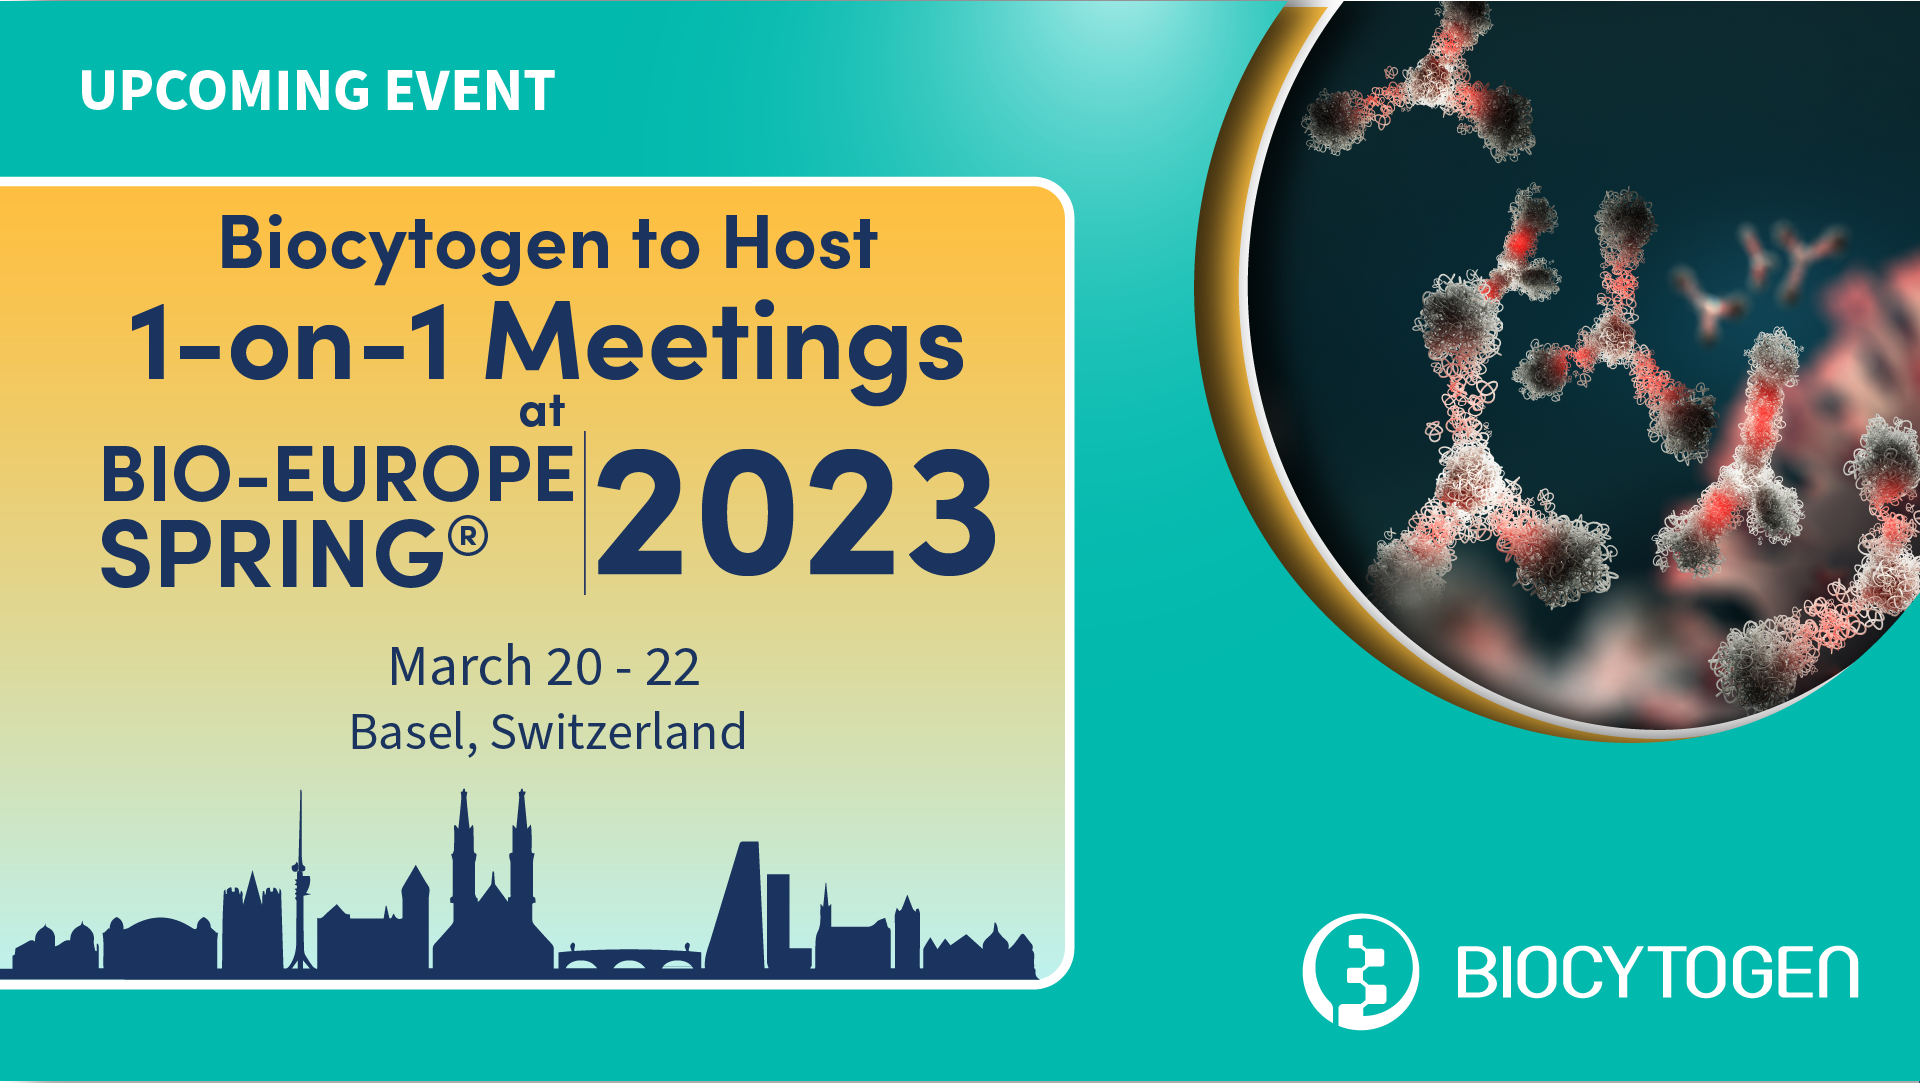 Biocytogen to Host 1on1 Meetings at BIOEUROPE SPRING® 2023 Biocytogen